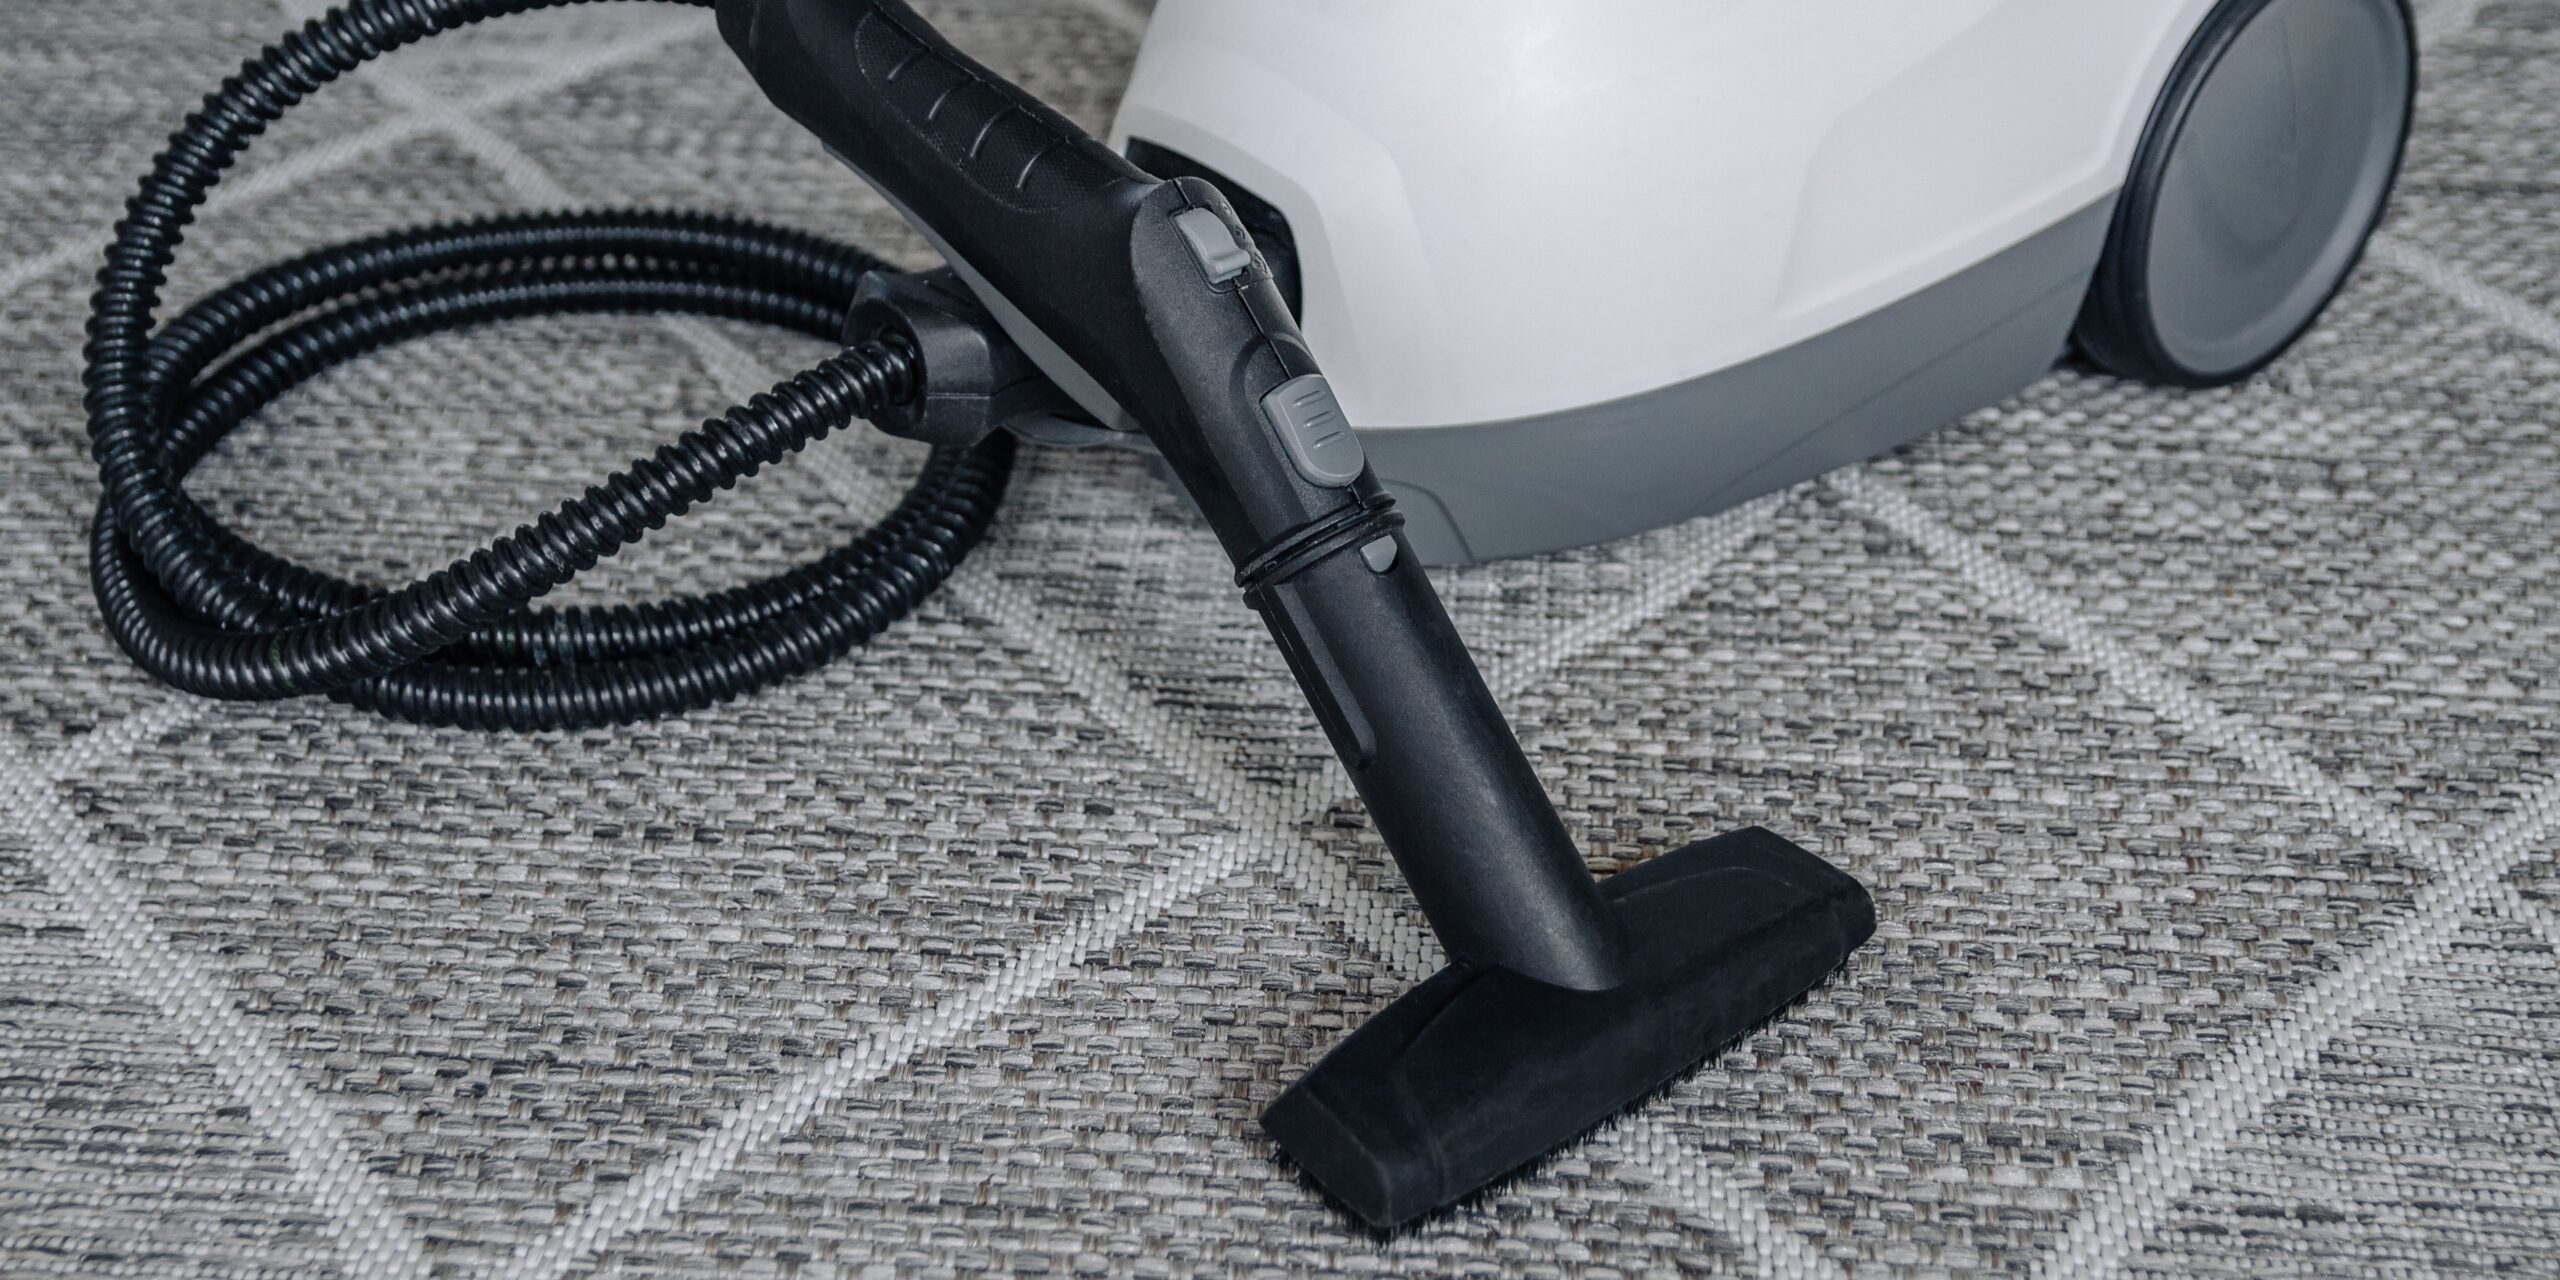 How to Steam Clean Carpet